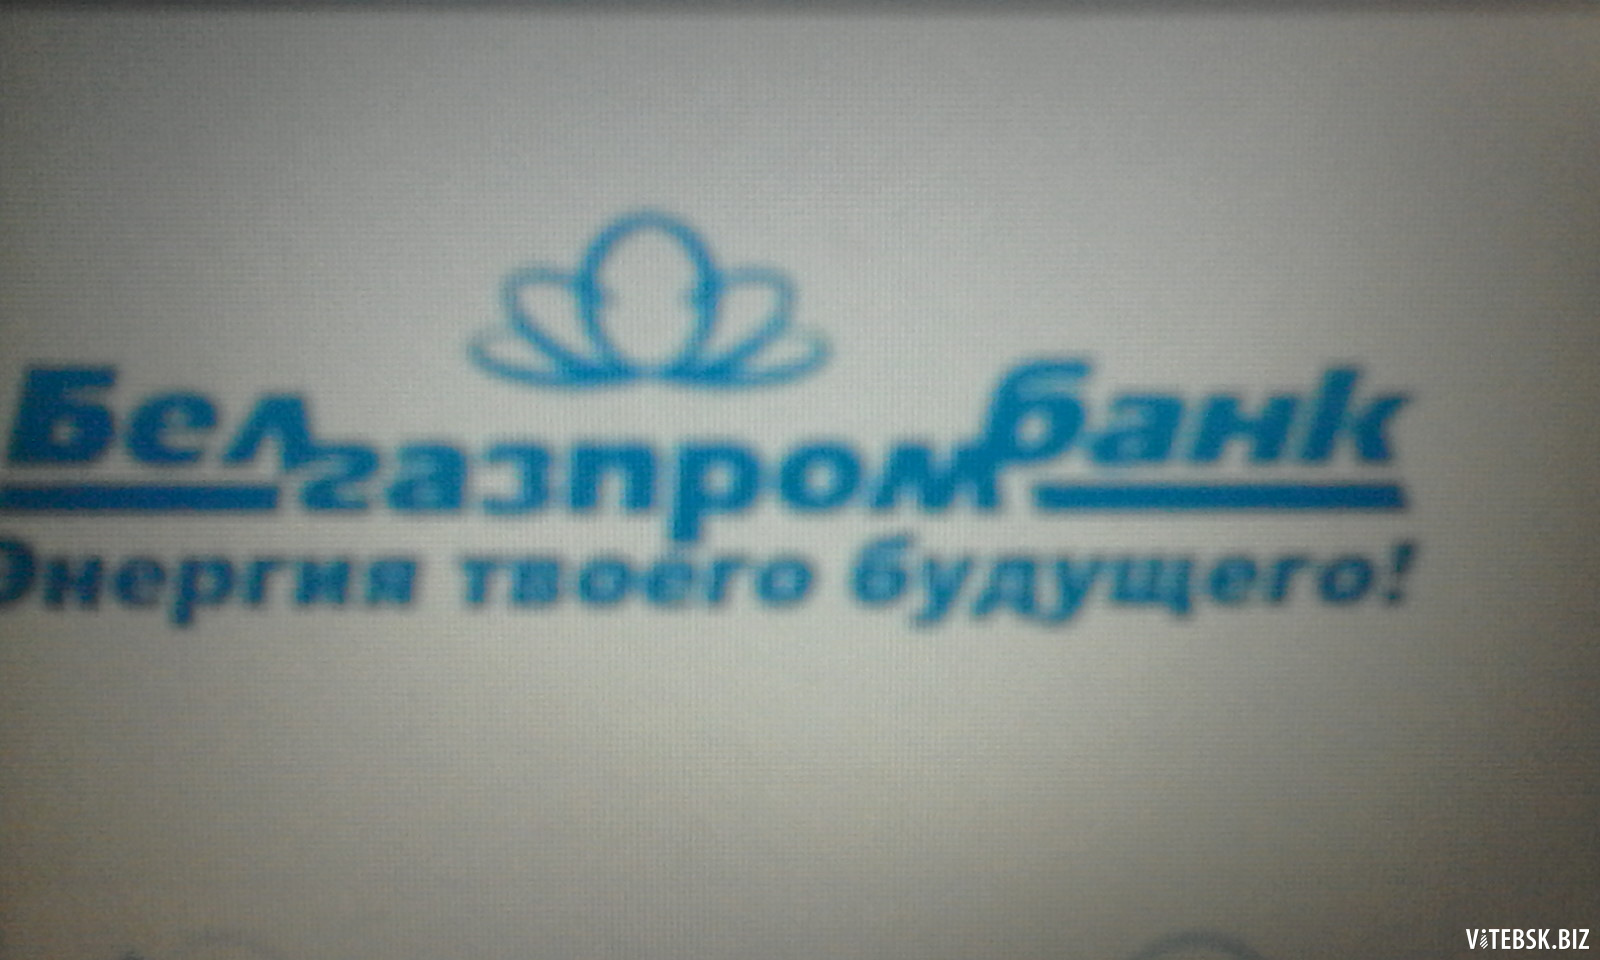 Банк партнер белгазпромбанк. Белгазпромбанк логотип. Карта Белгазпромбанка. Белгазпромбанк печать. Белгазпромбанк синяя печать.